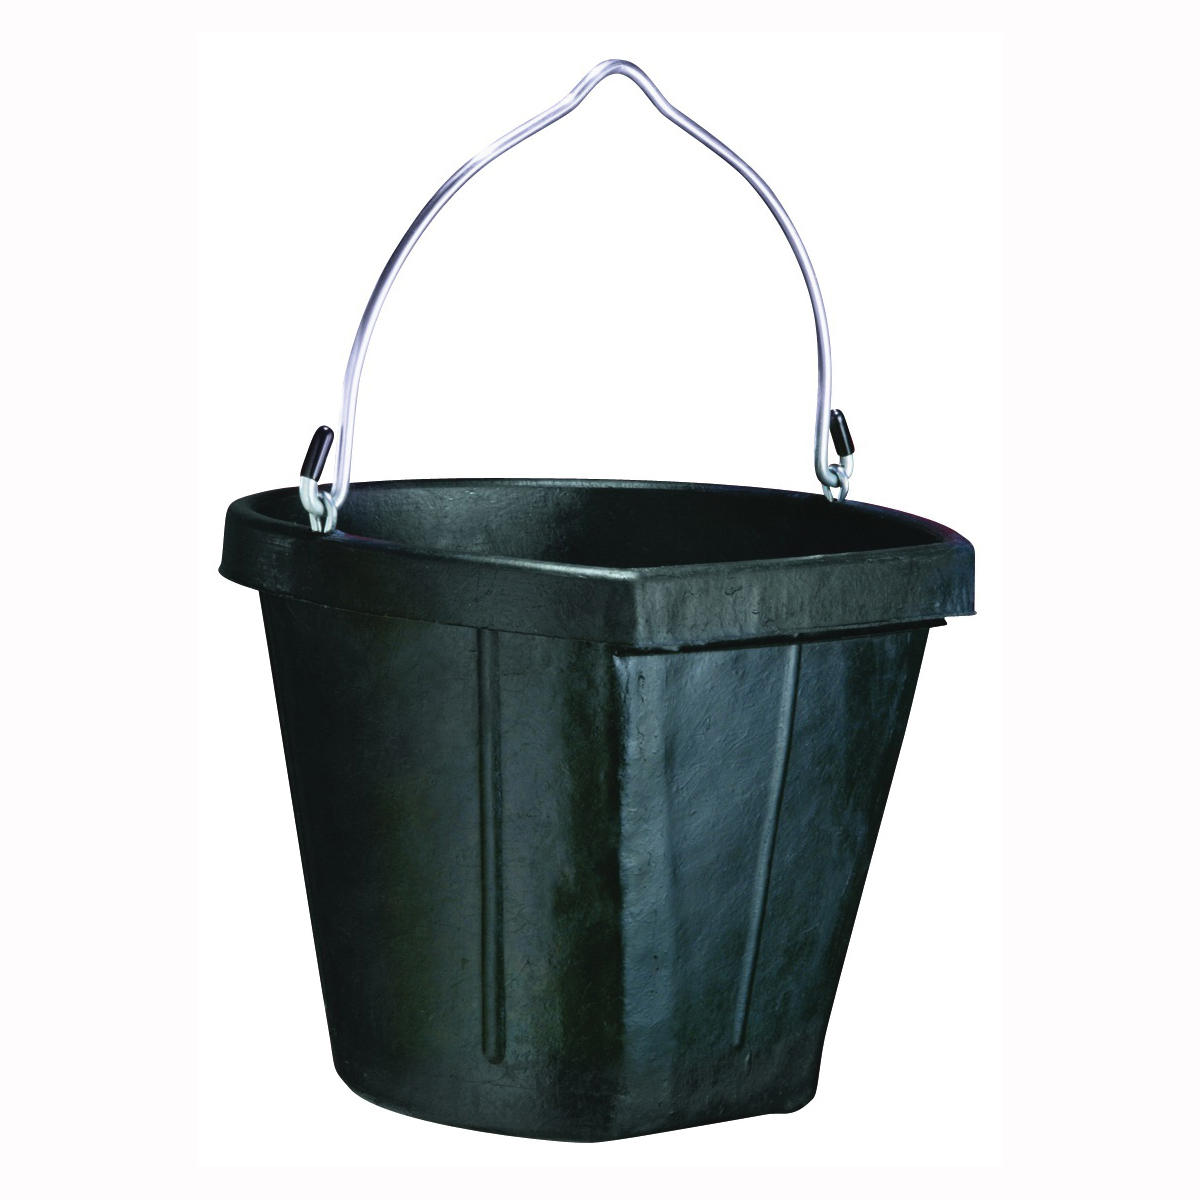 Fortex-Fortiflex B600-18 Bucket, 18 qt Volume, Fortalloy Rubber/HDPE, Black